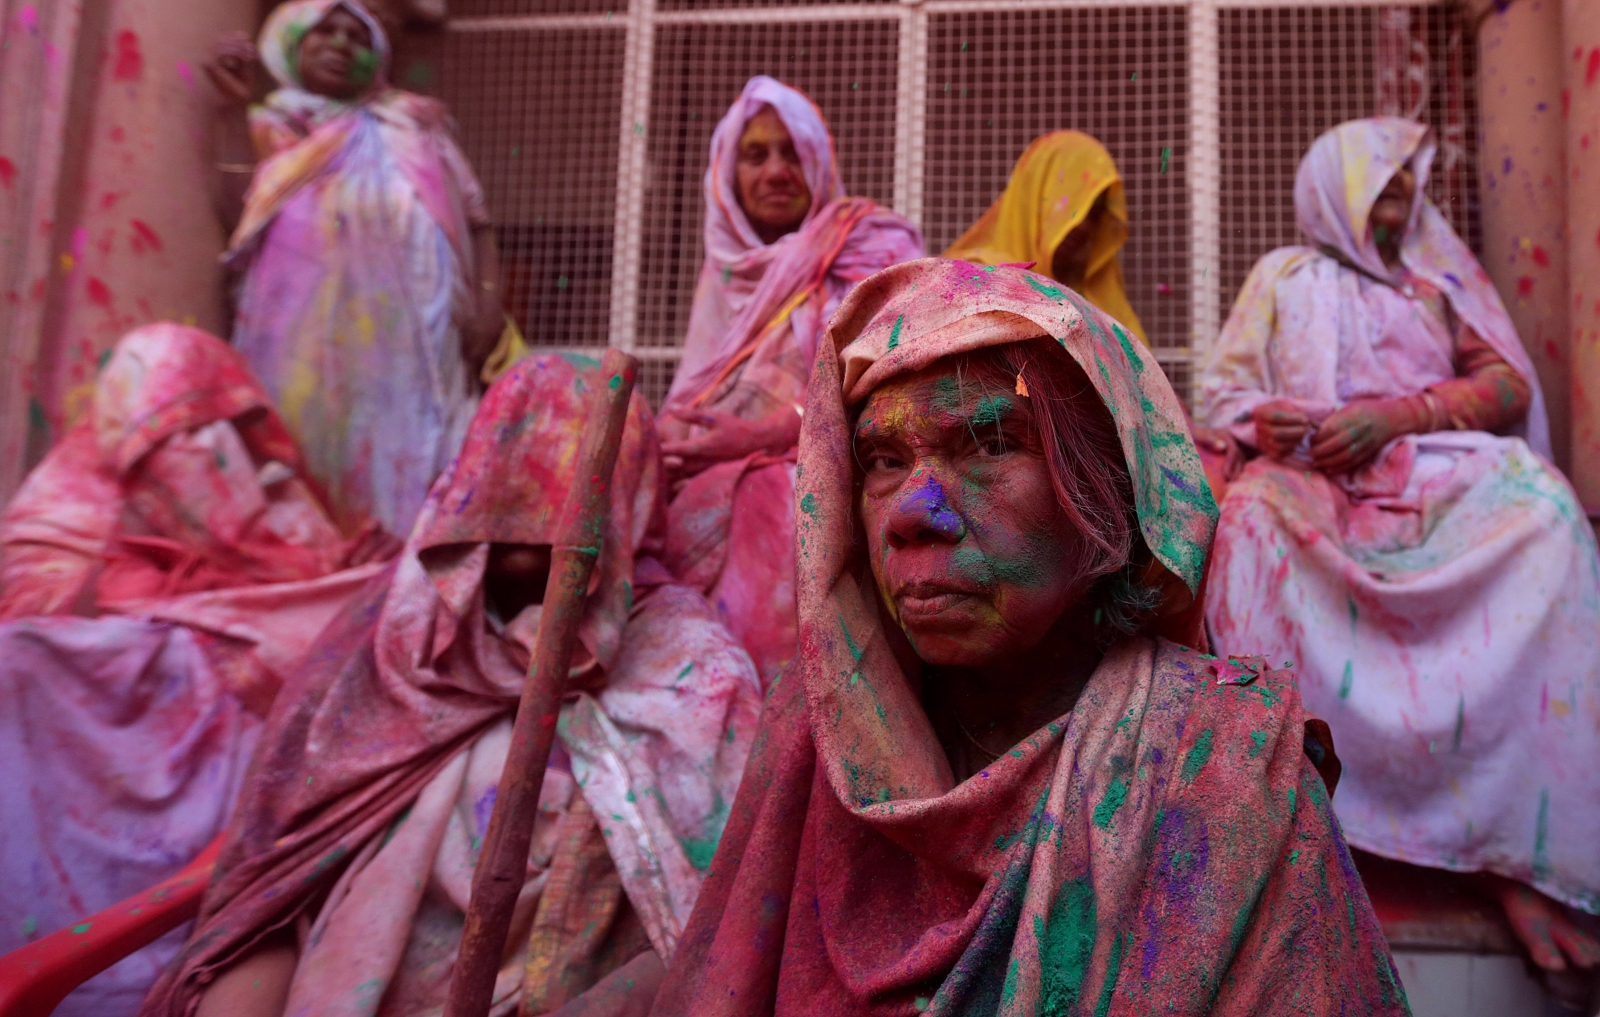 Święty festiwal wdów w Vrindavan w Indiach.
Fot. PAP/EPA/HARISHH TYAGI